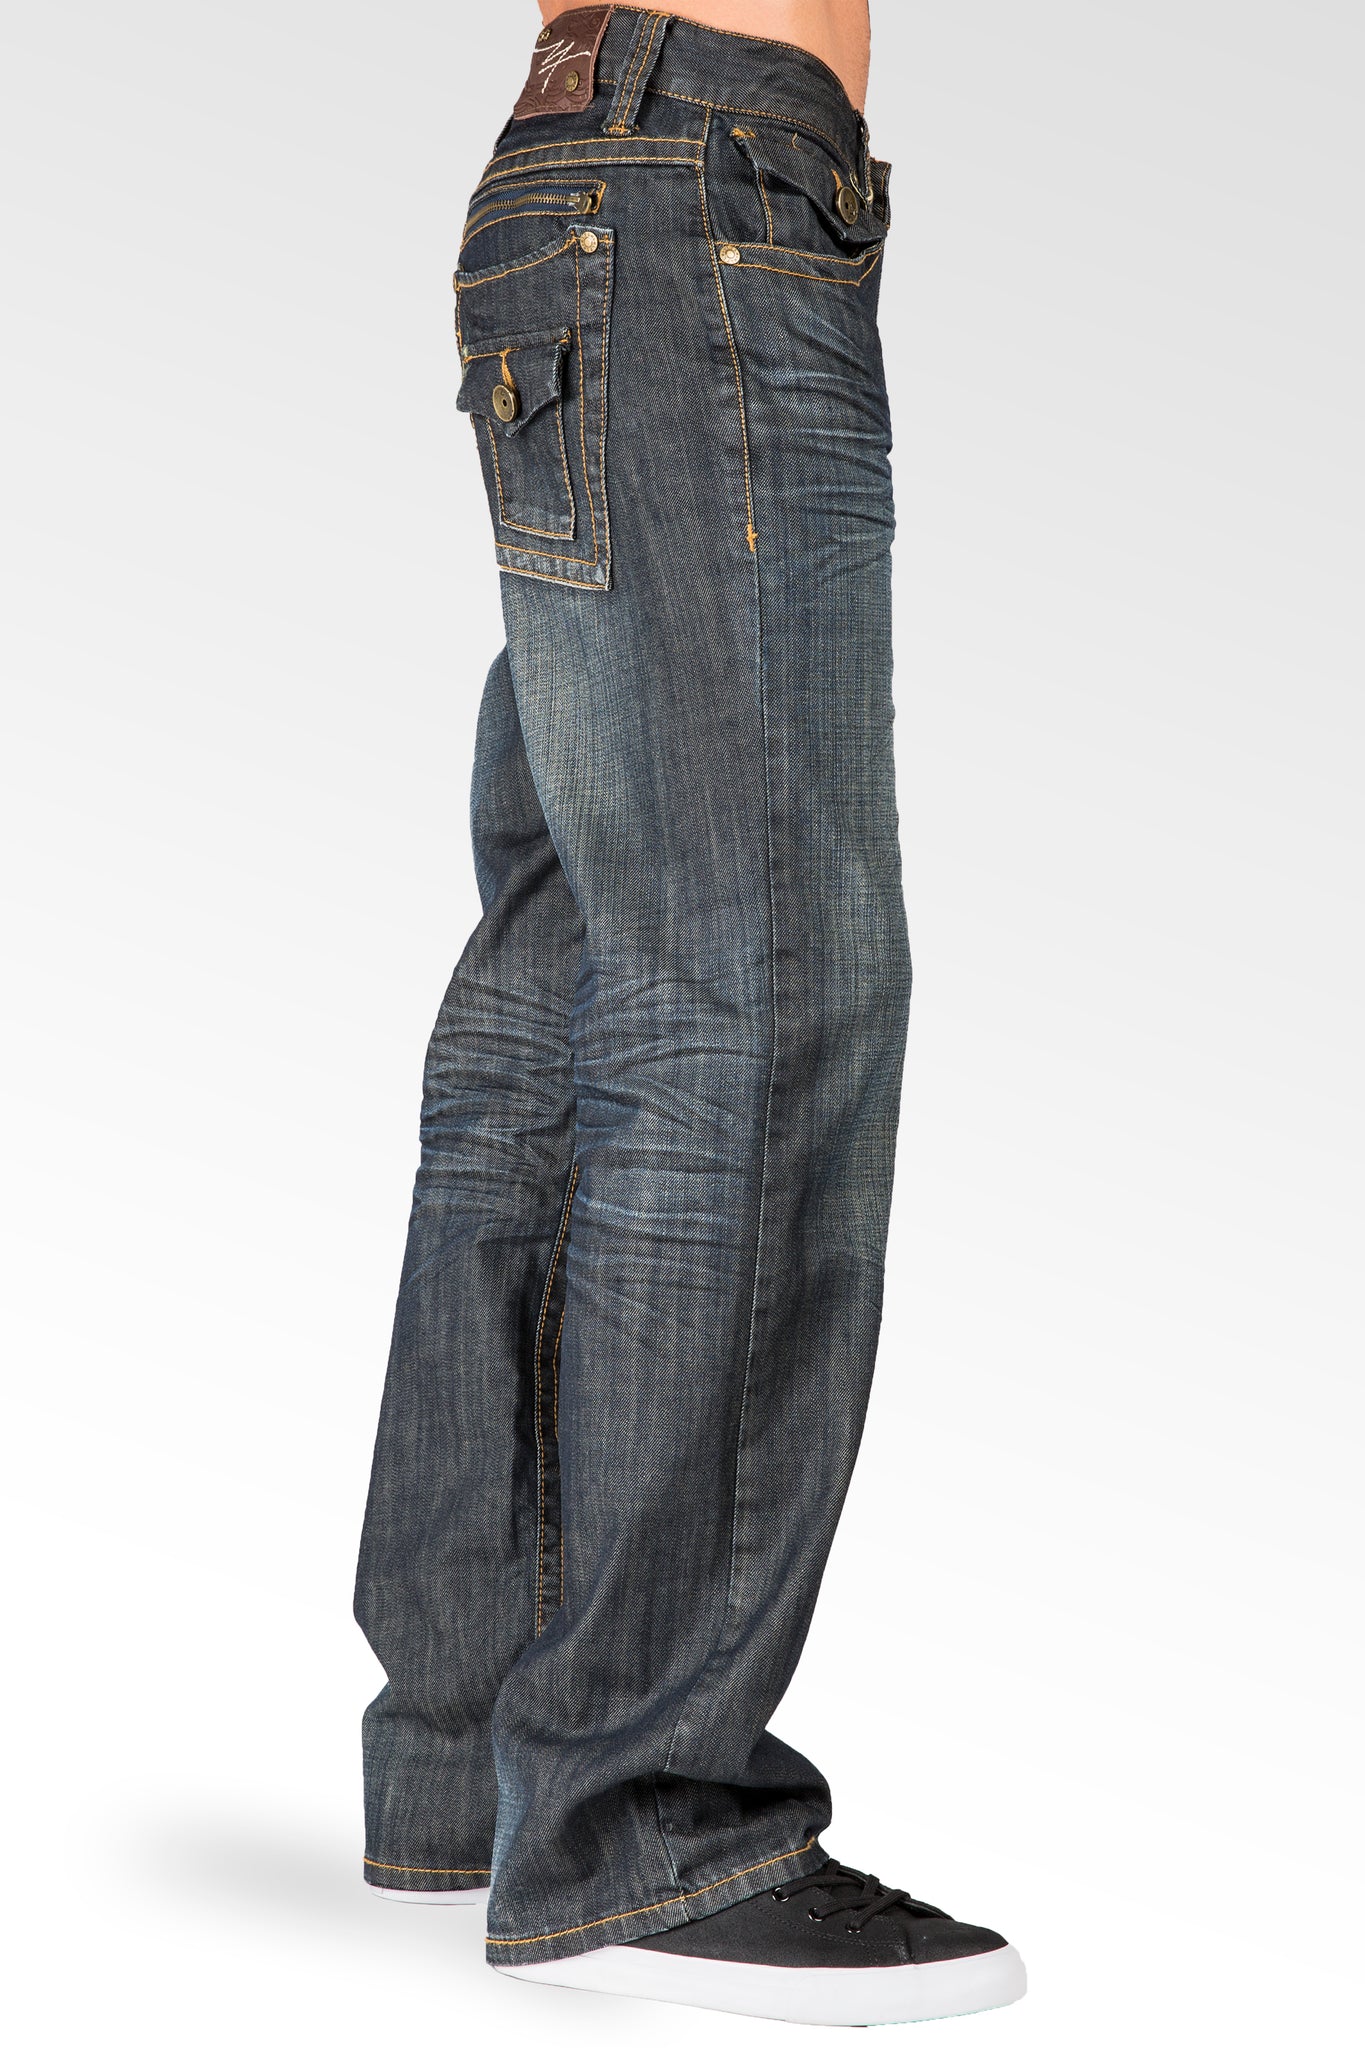 Level 7 Men's Relaxed Bootcut Dark Vintage Jean Zipper Pockets